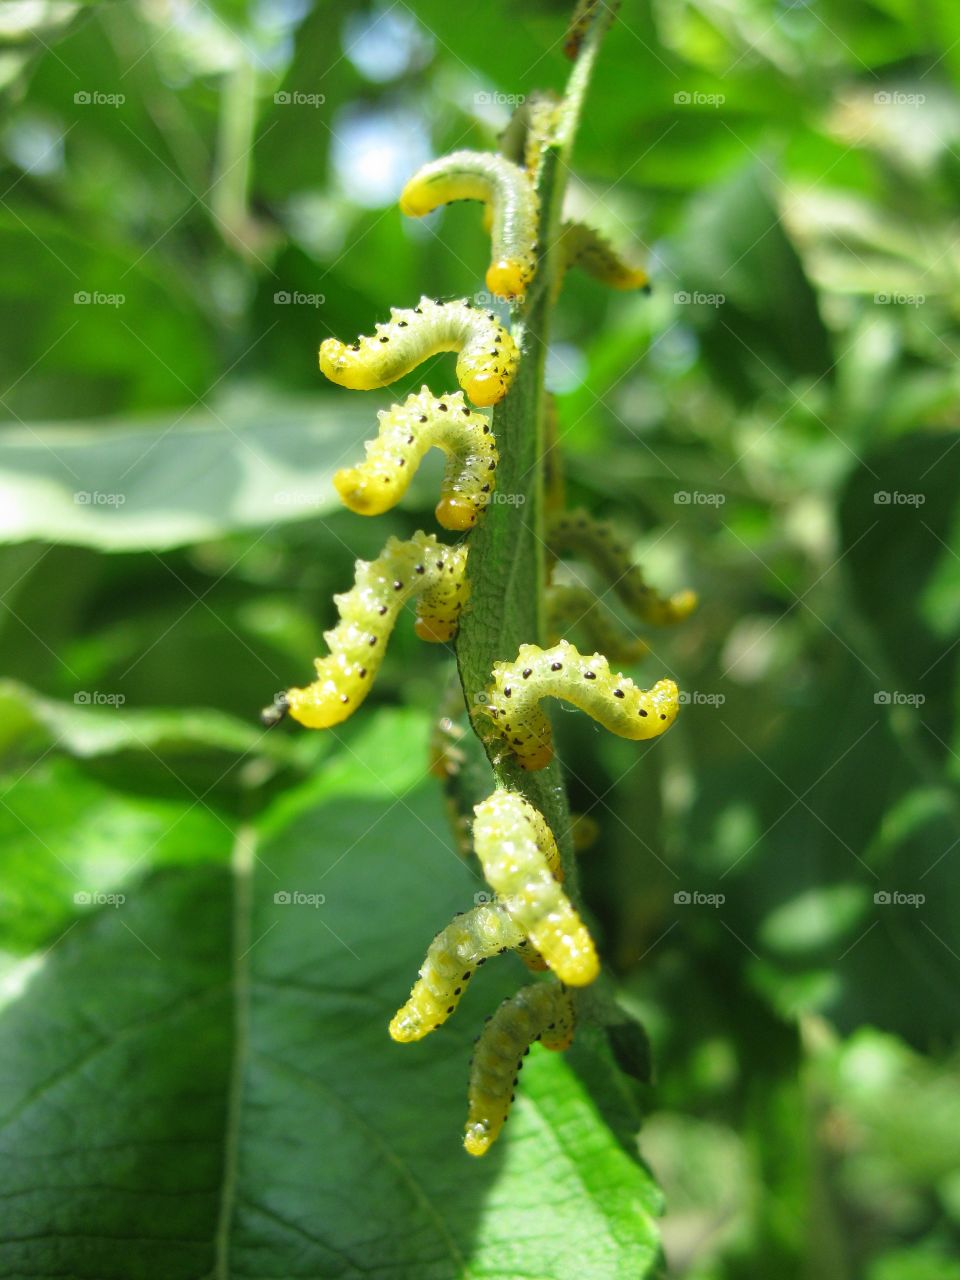 Caterpillar on green plant